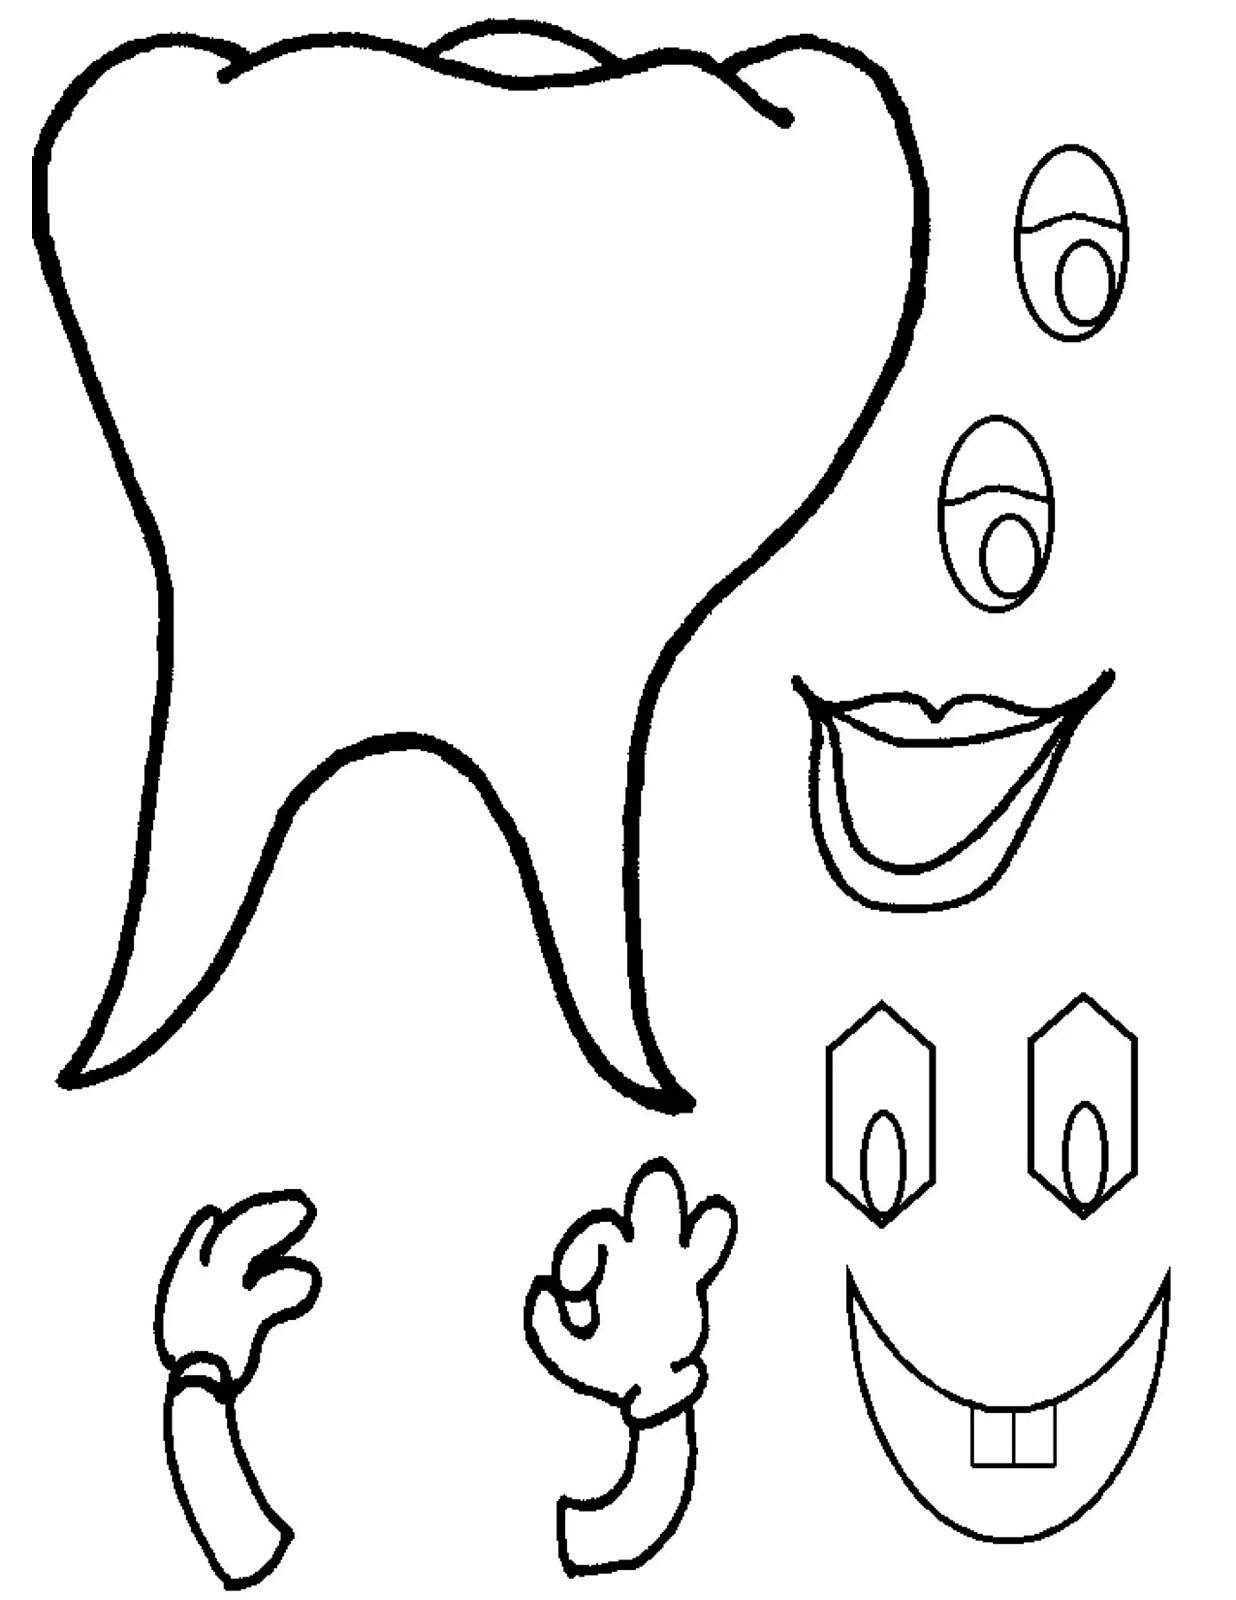 Зуб раскраска для детей. Аппликация зубы. Раскраска зуб. Шаблон зуба для аппликации.